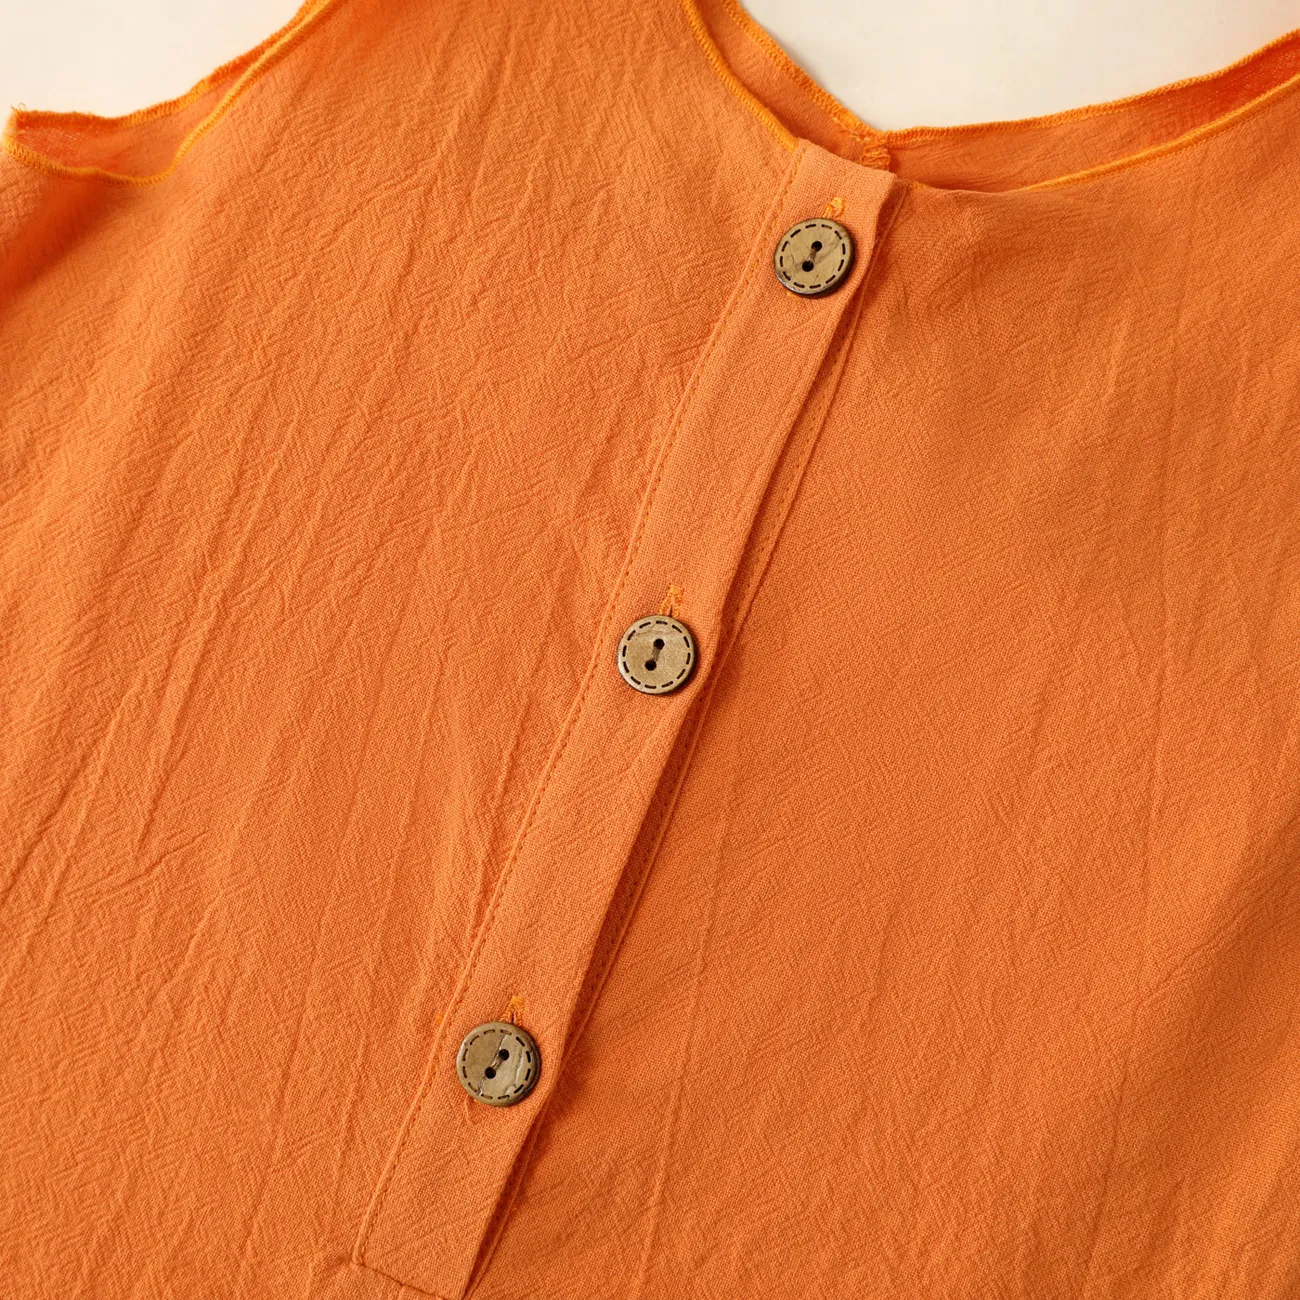 Toddler Girl Floral Print/Stripe/Orange Button Design Ruffled Cuff Bowknot Strap Romper Jumpsuit Shorts Orange big image 1